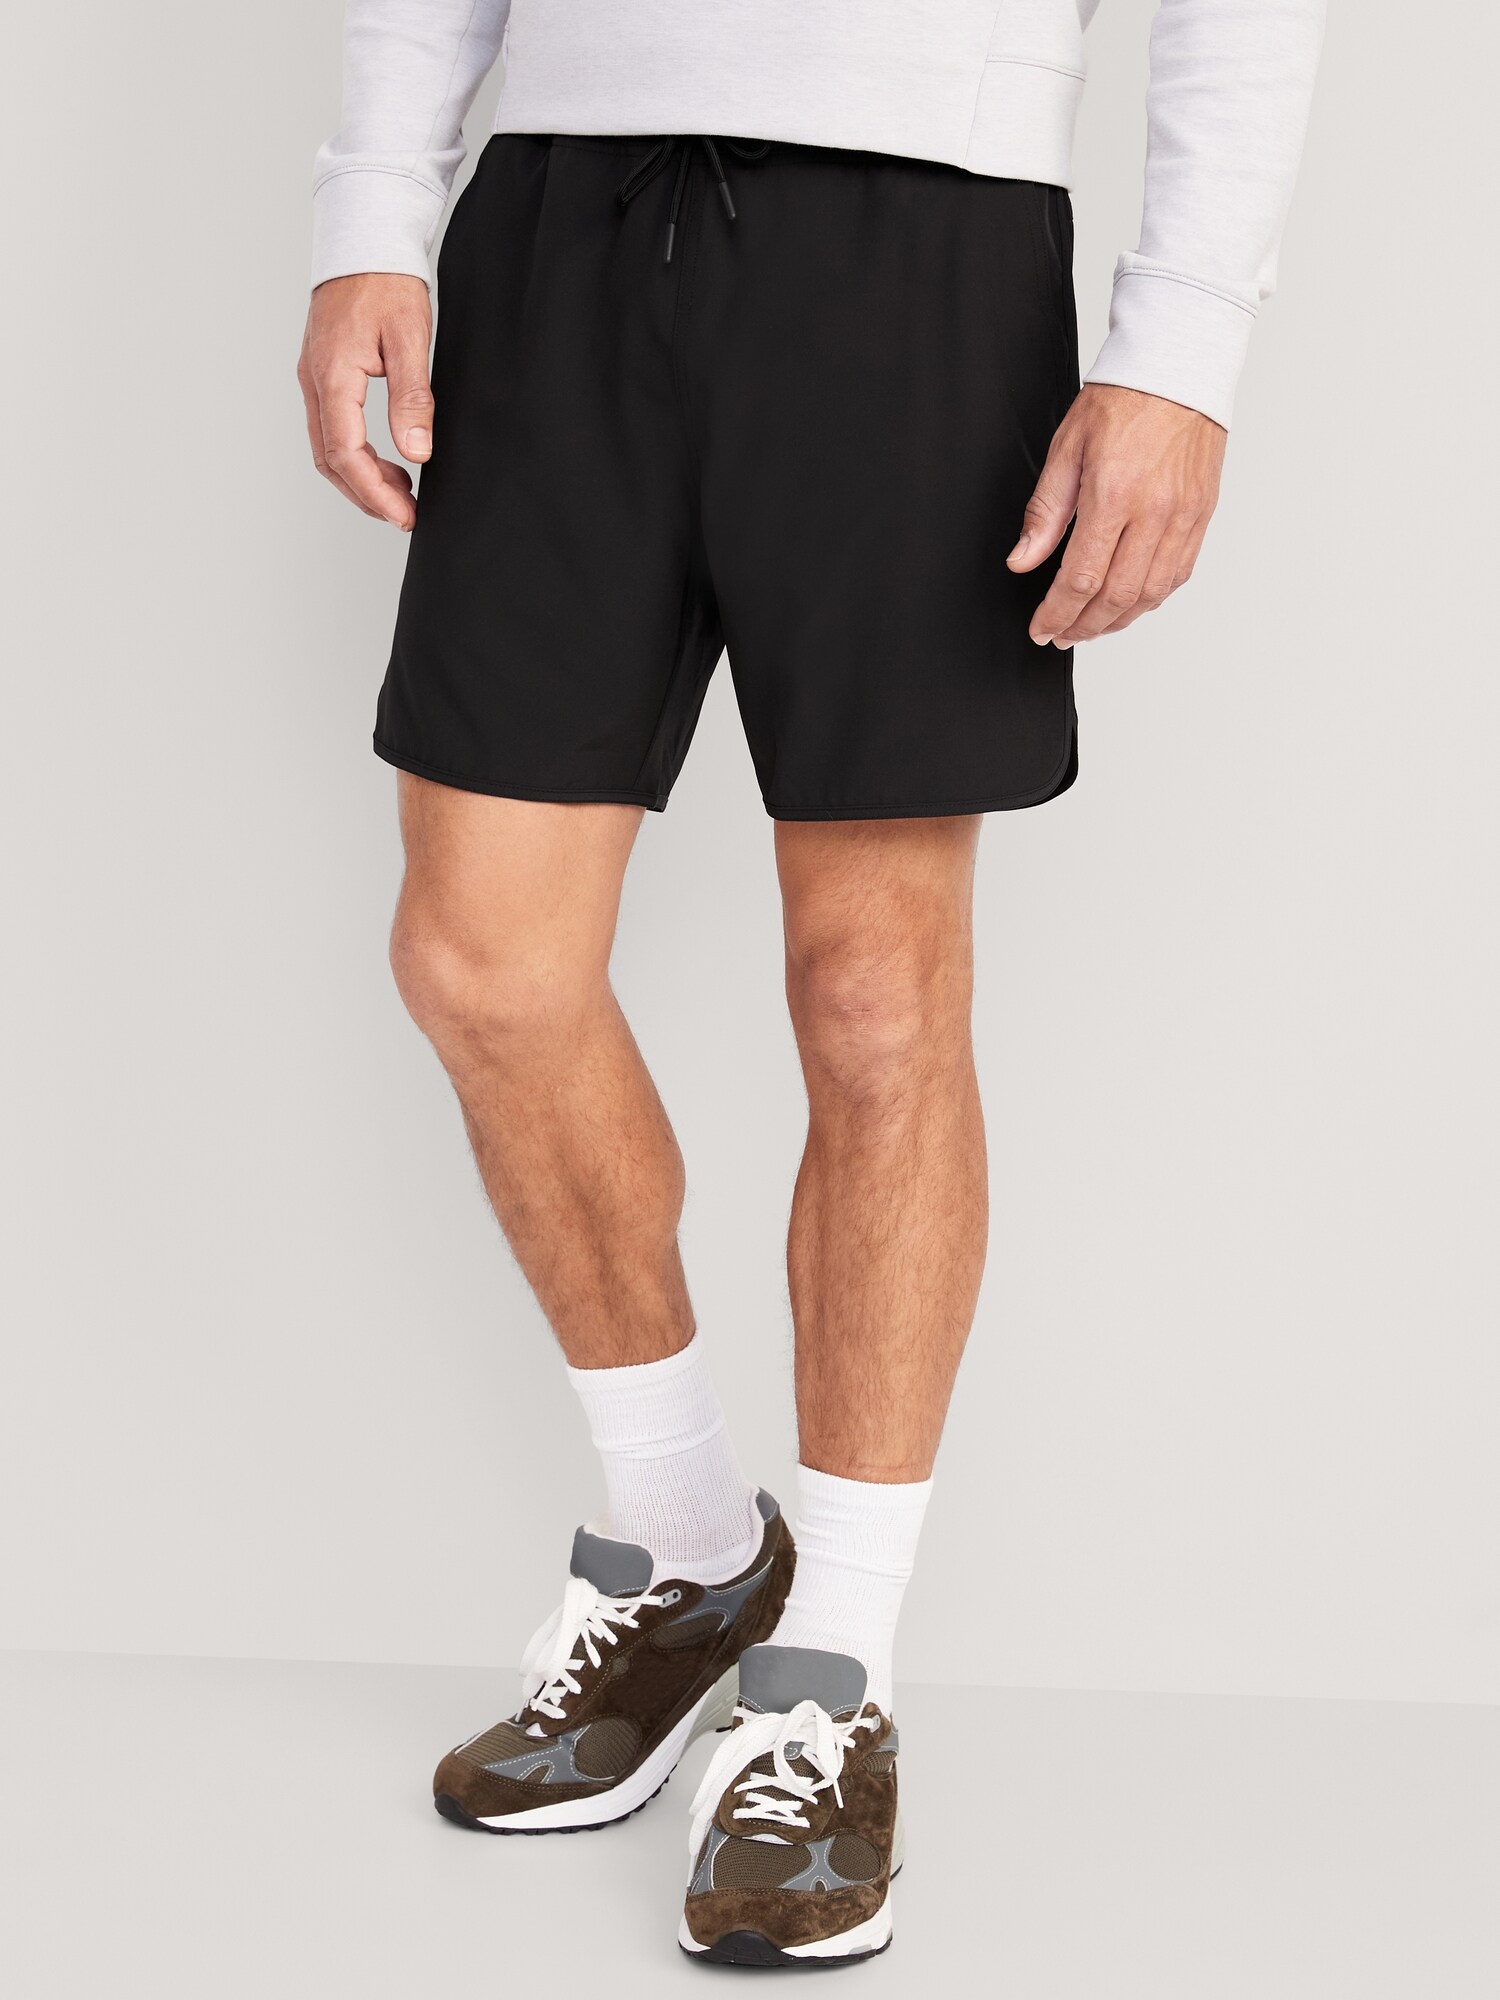 Old Navy StretchTech Rec Swim-to-Street Shorts -- 7-inch inseam black. 1